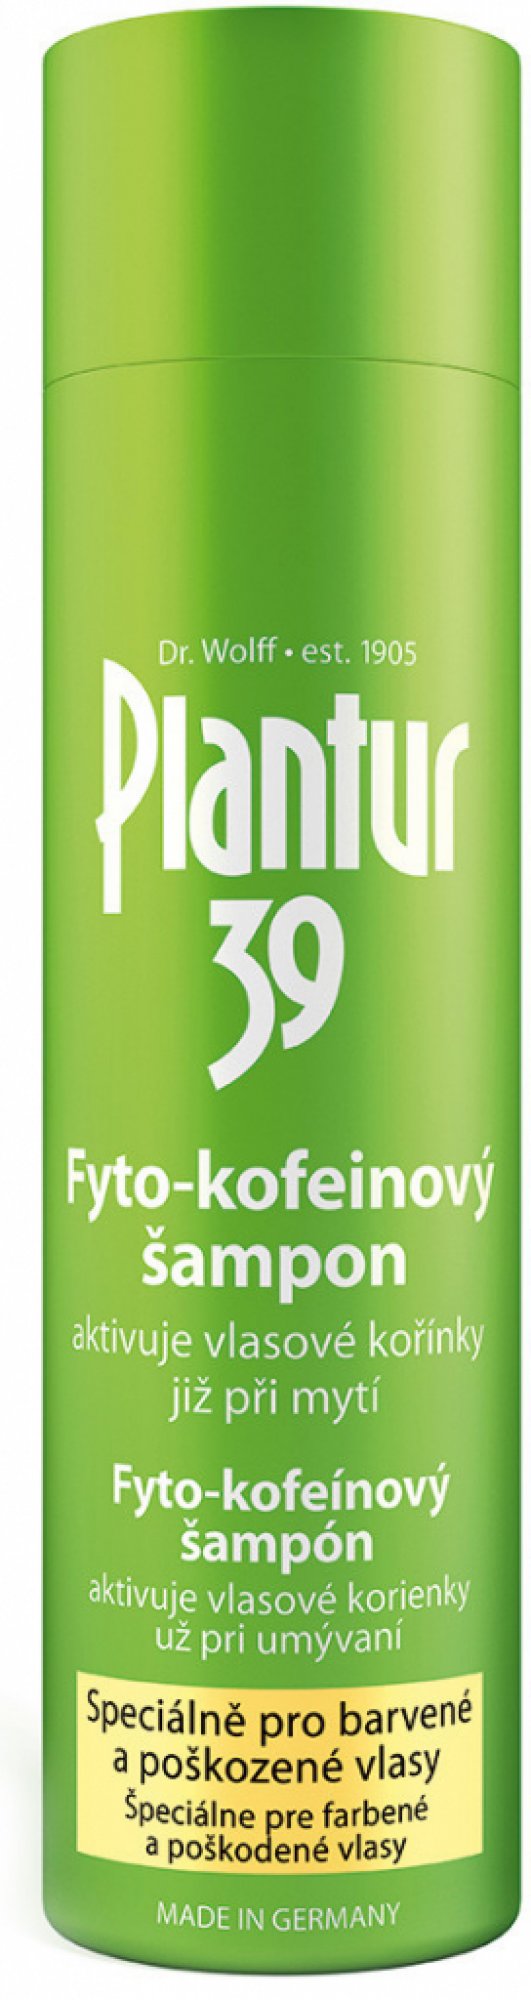 plantur 39 šampon